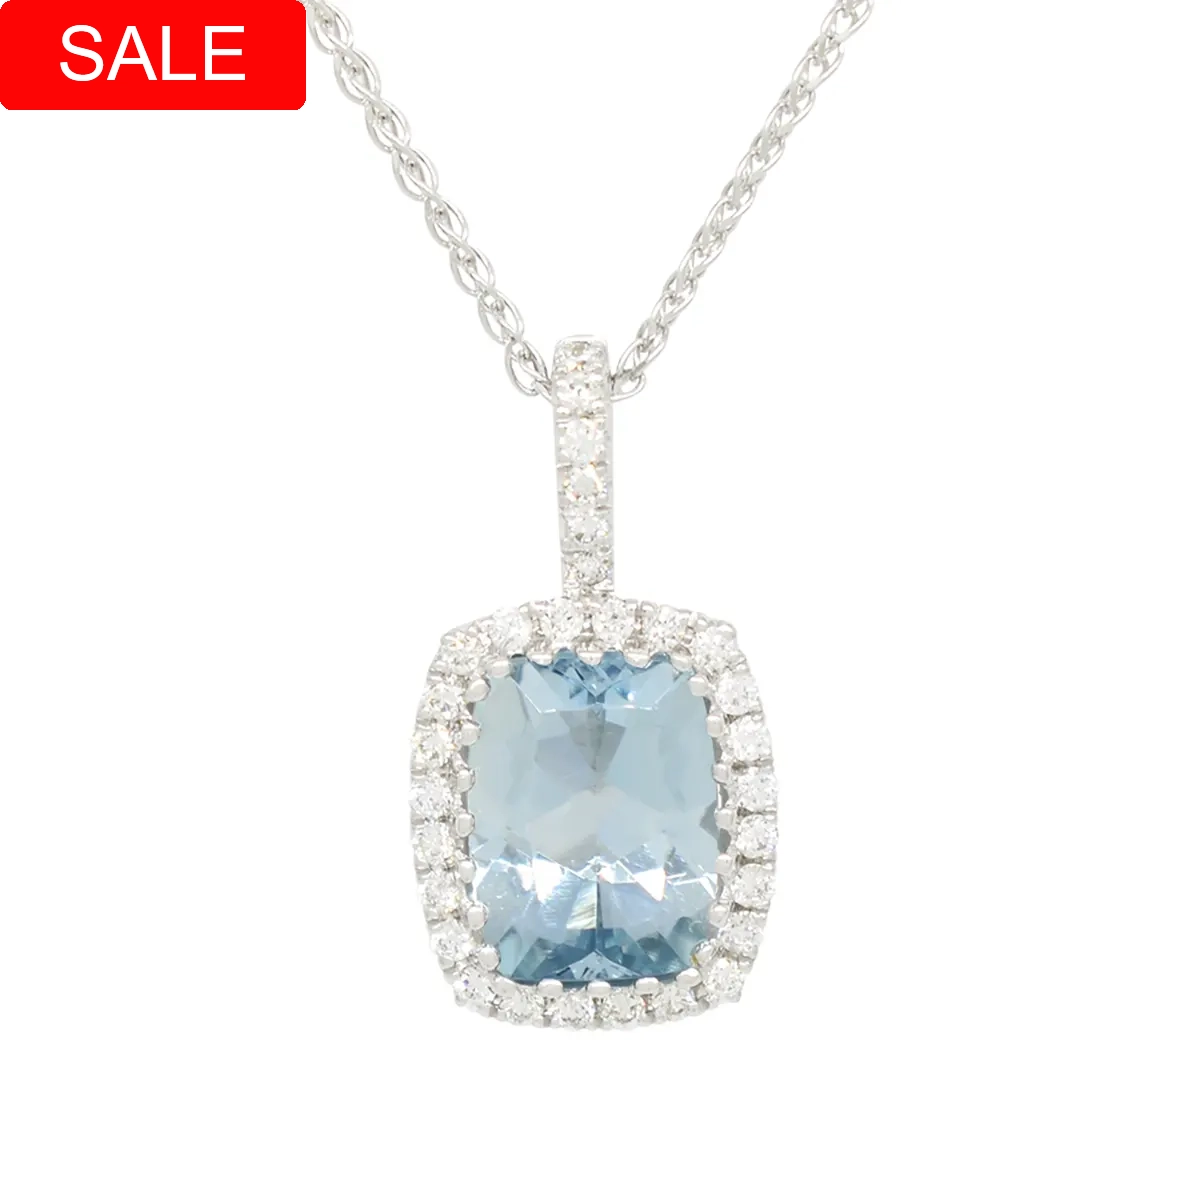 Aquamarine and Diamond Necklace with Stunning Cushion Cut Aquamarine and Diamond Halo